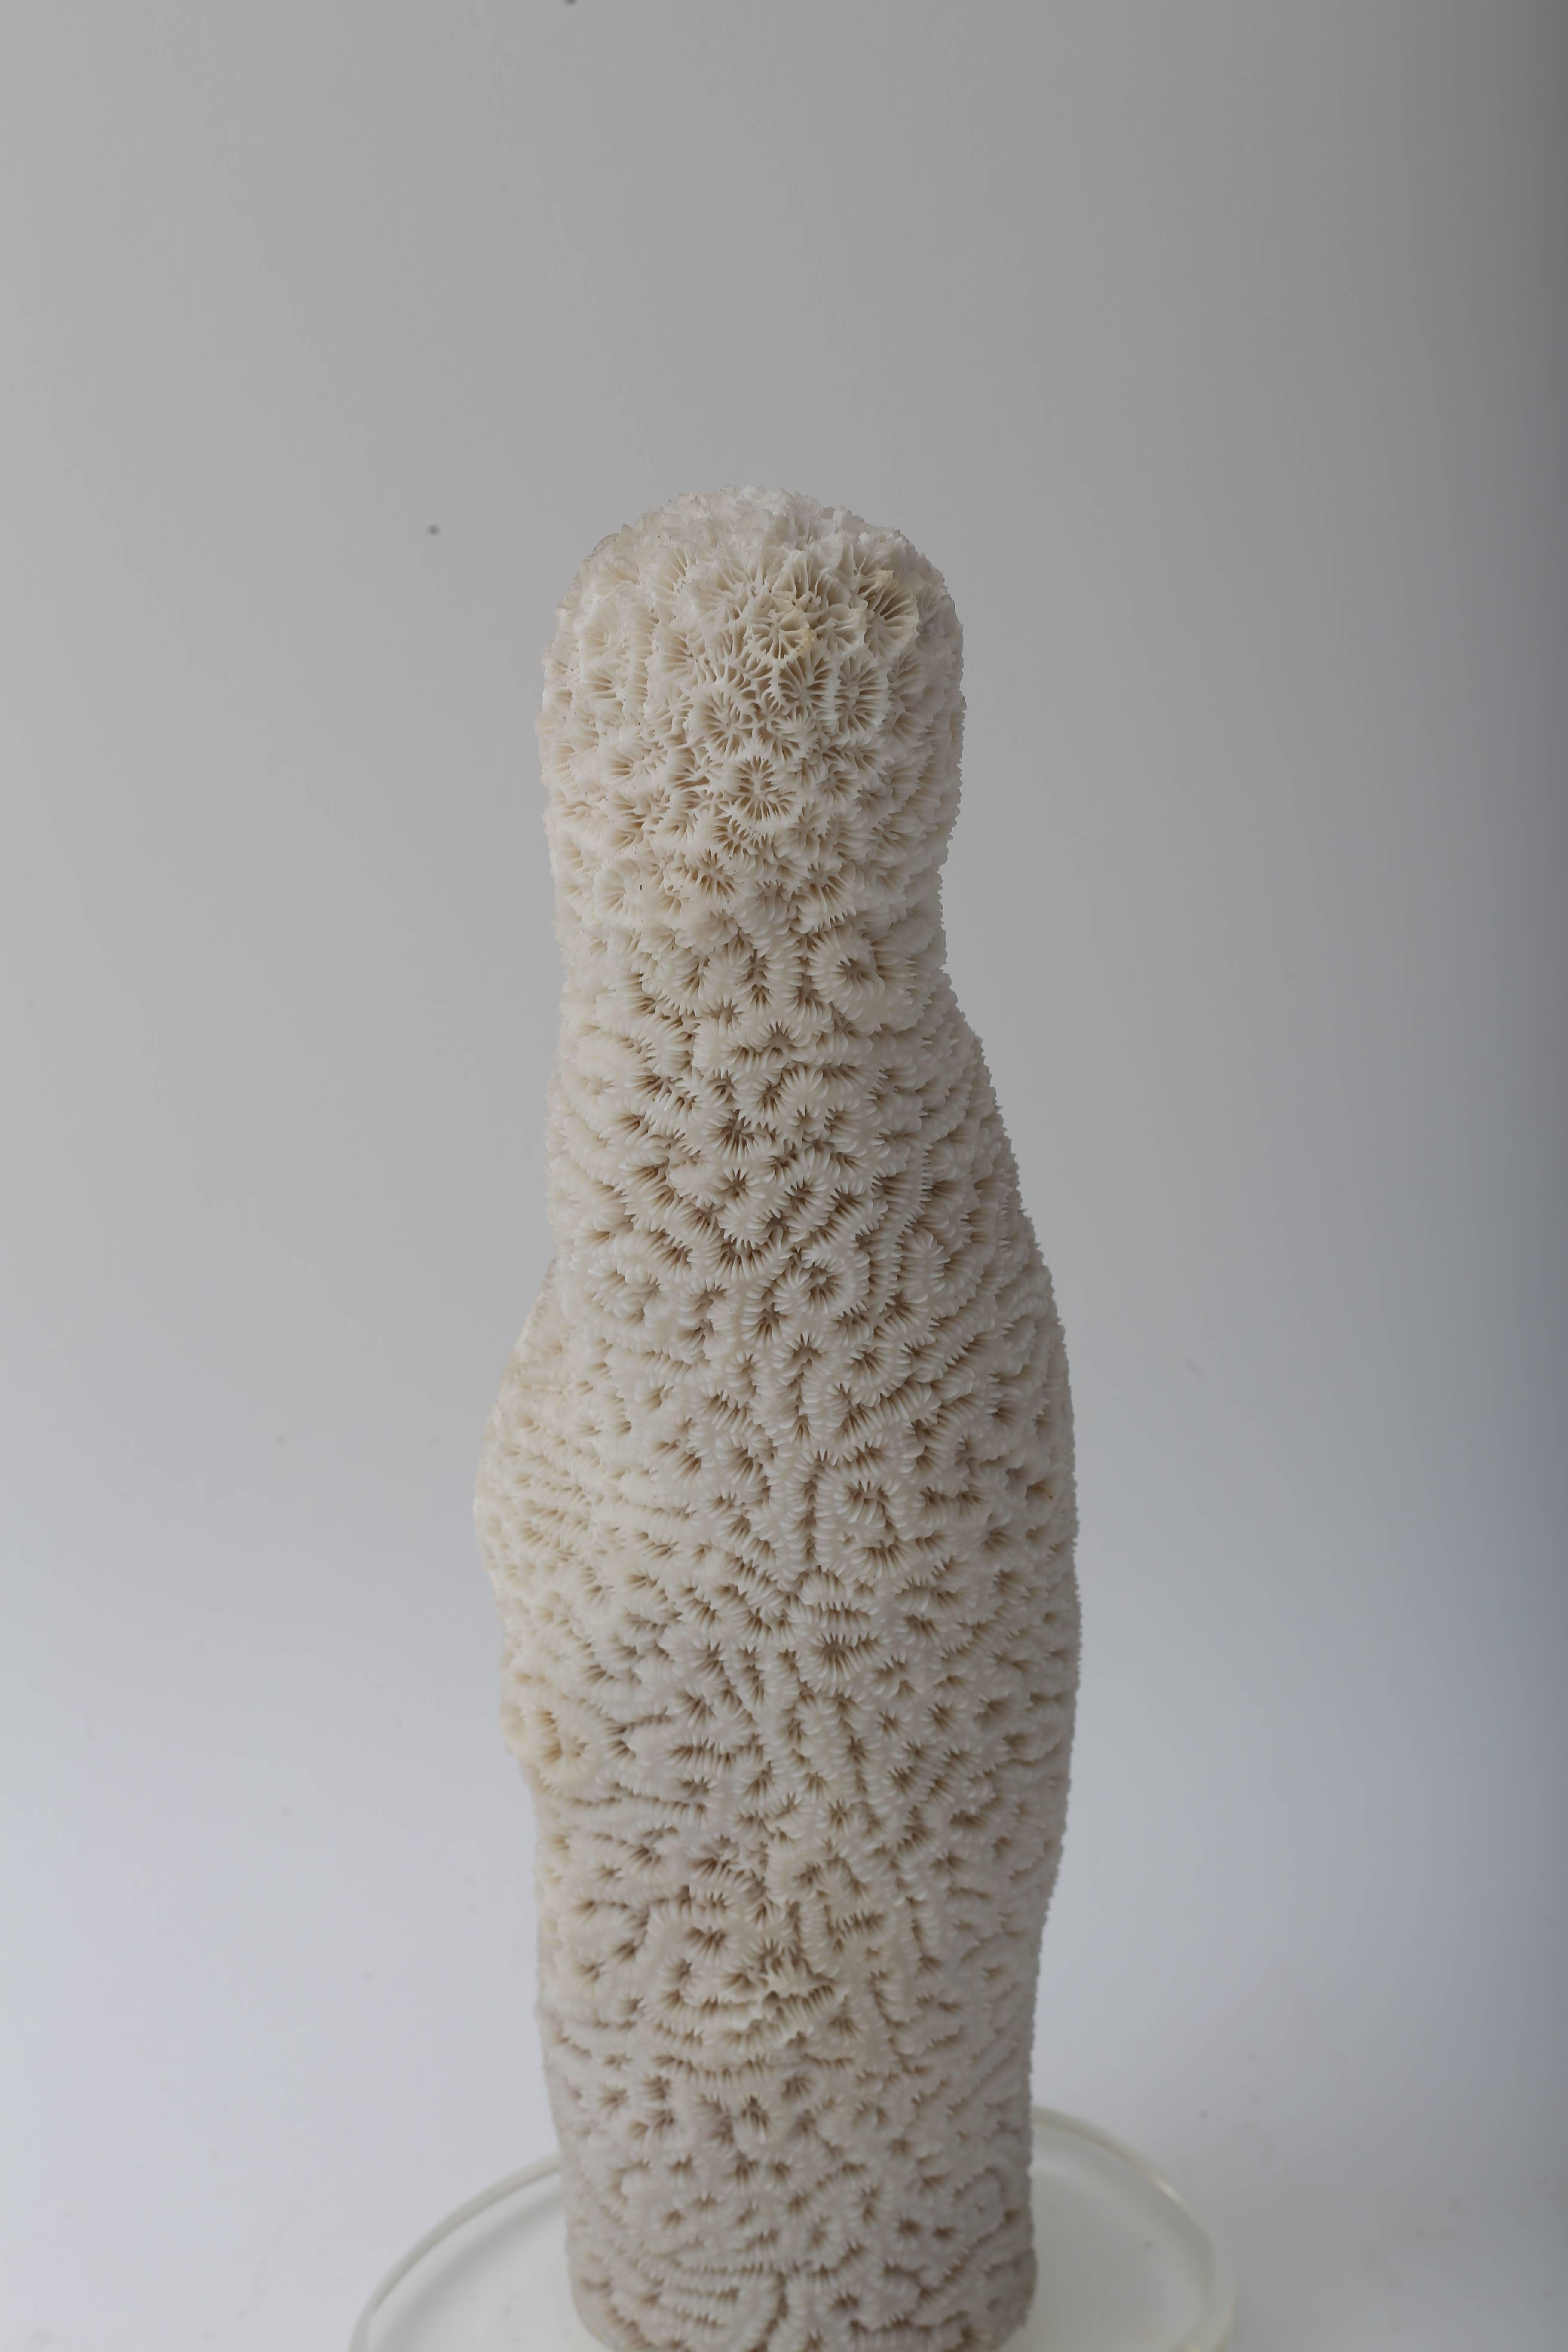 Organic Modern White Specimen Coral For Sale